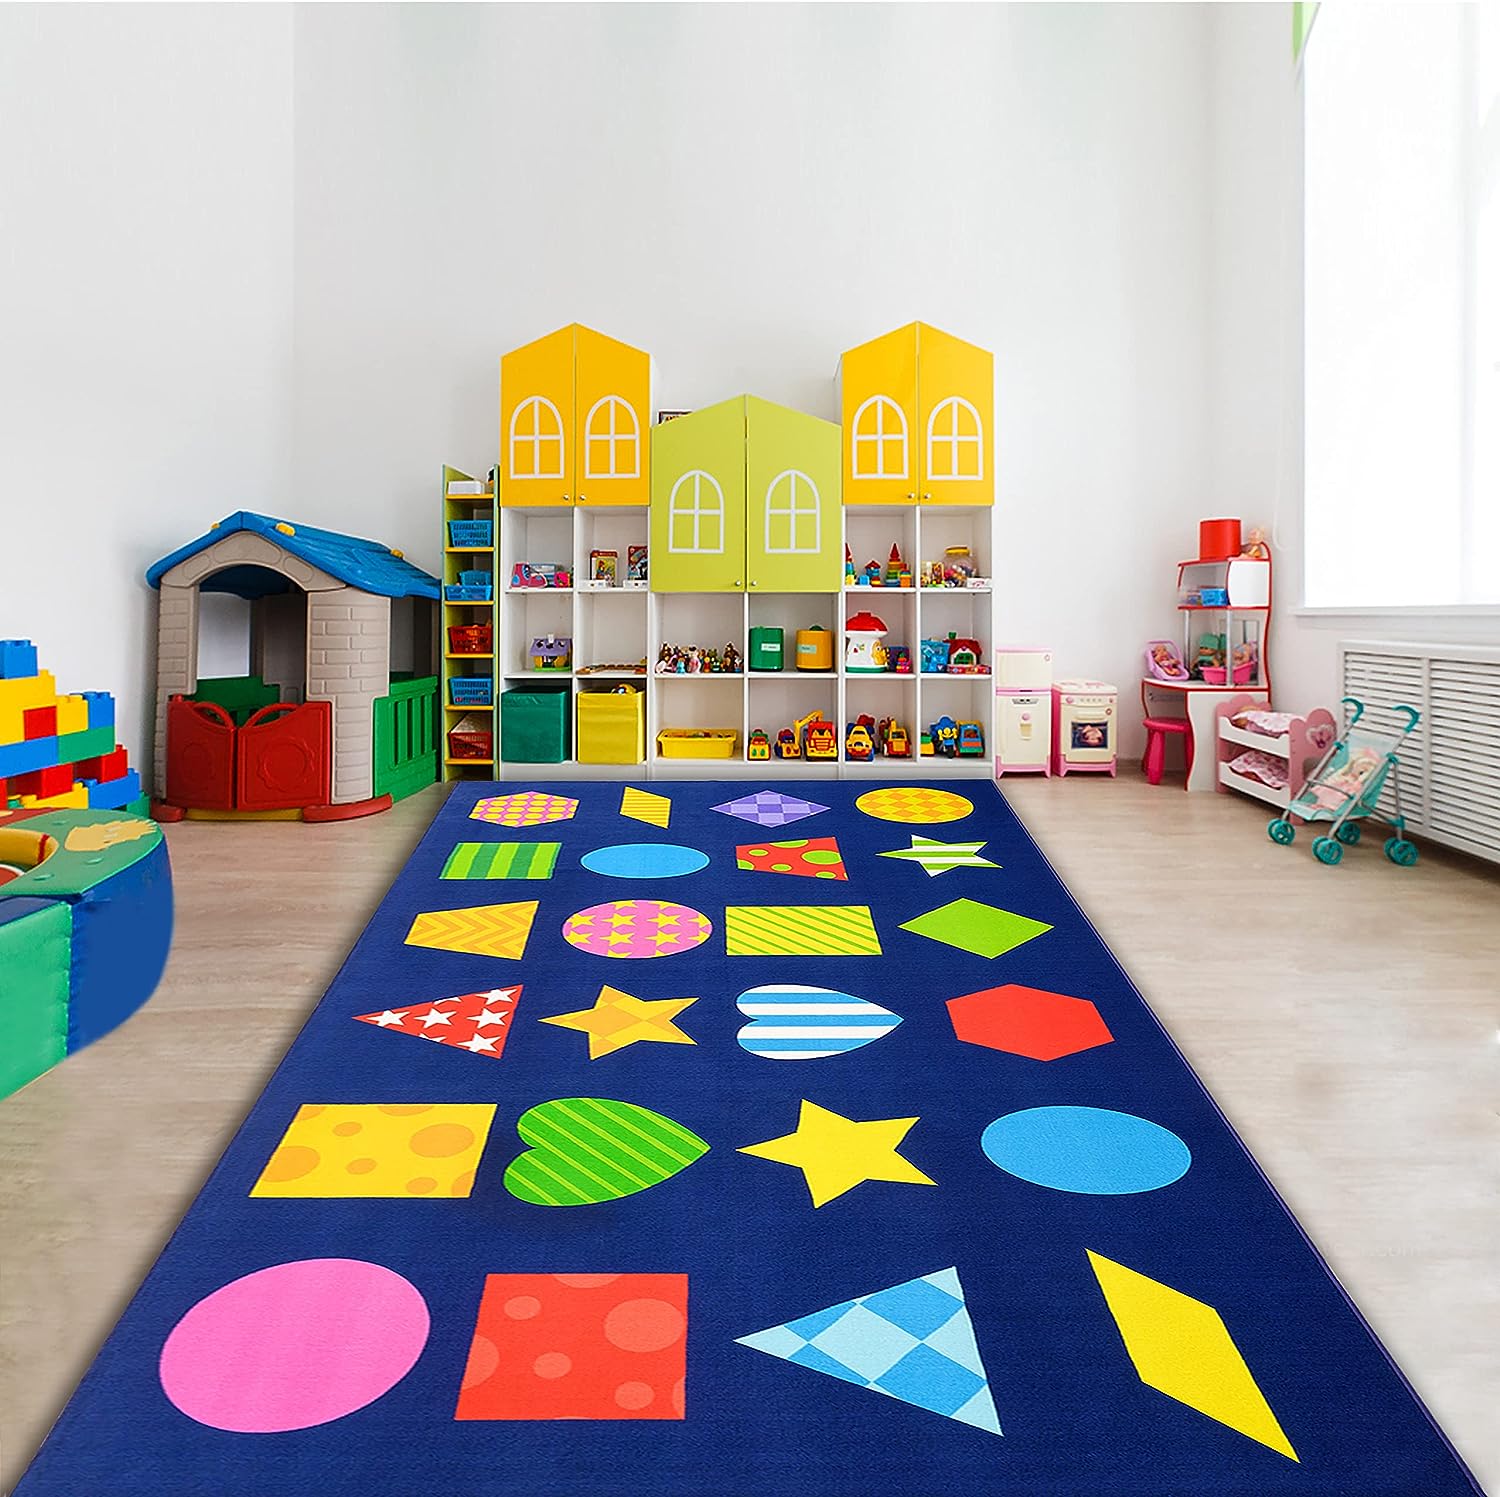 13'x7'5" Elementary Classroom Carpet 24 Seats Kids Rugs for Nursery